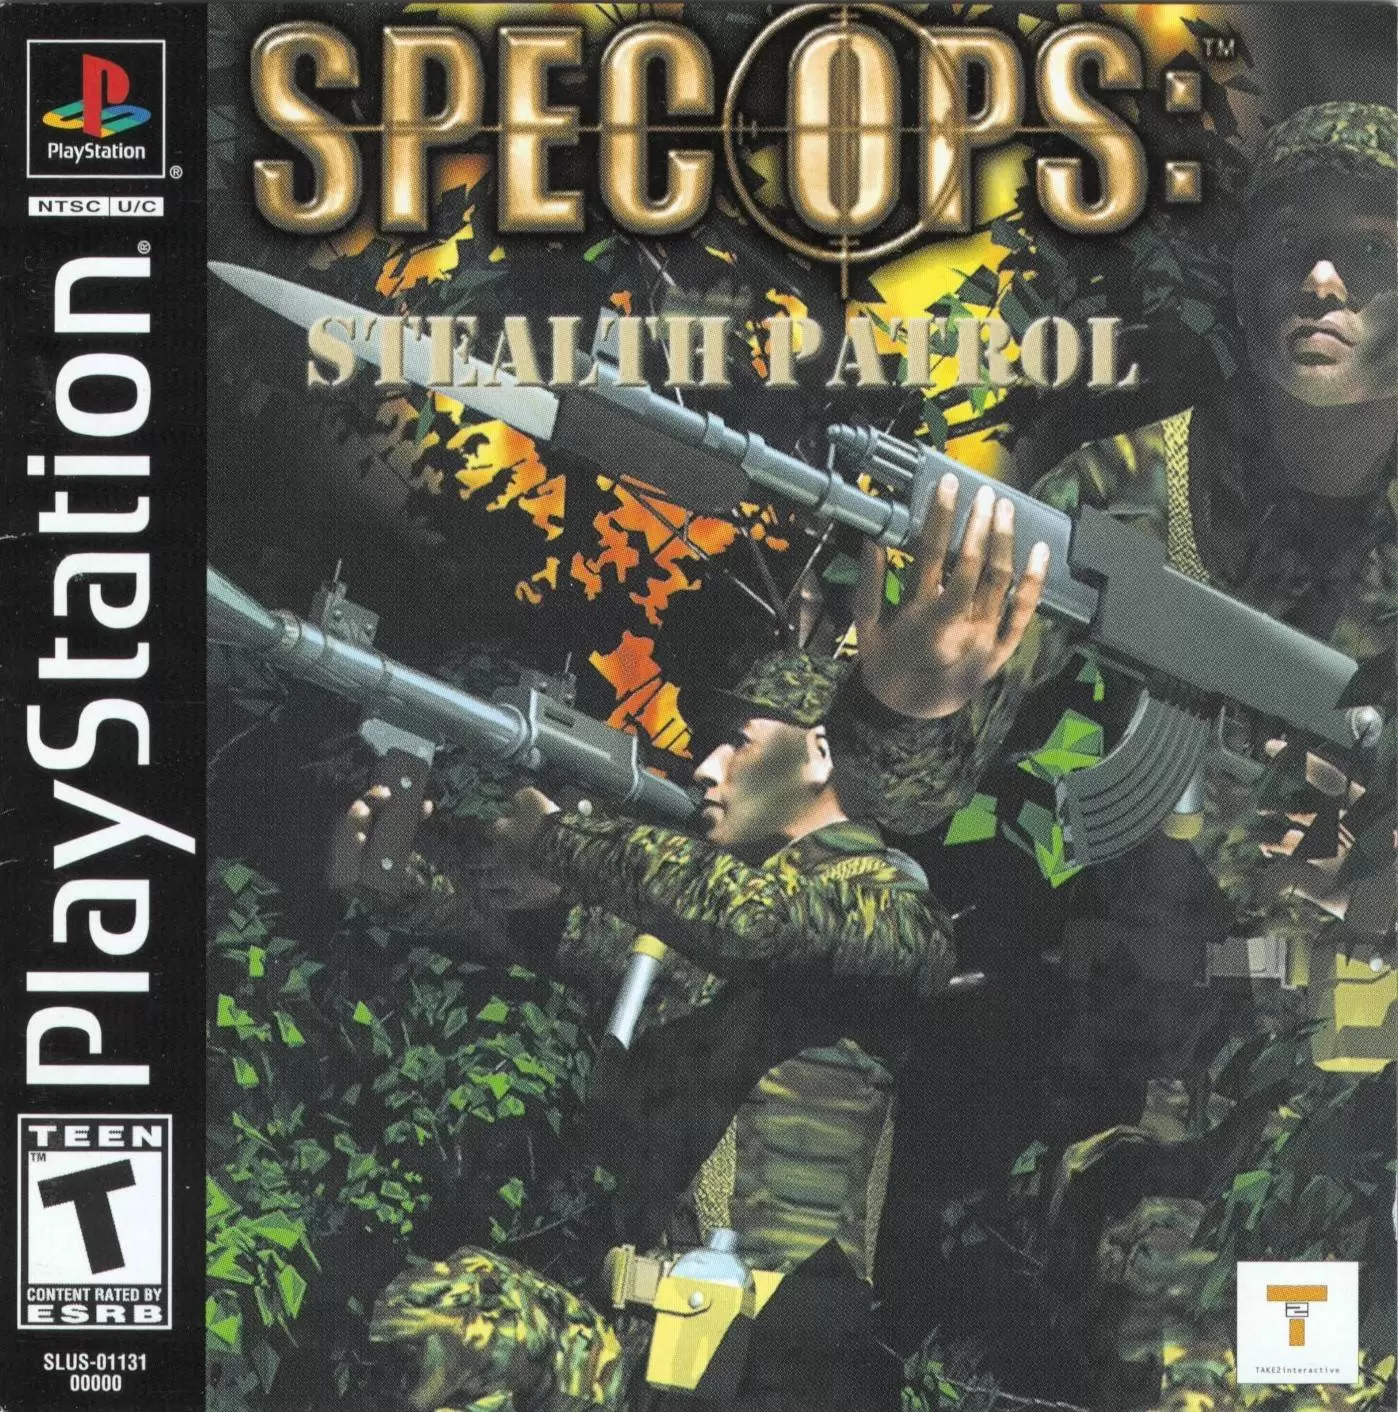 Playstation games - Spec Ops: Stealth Patrol